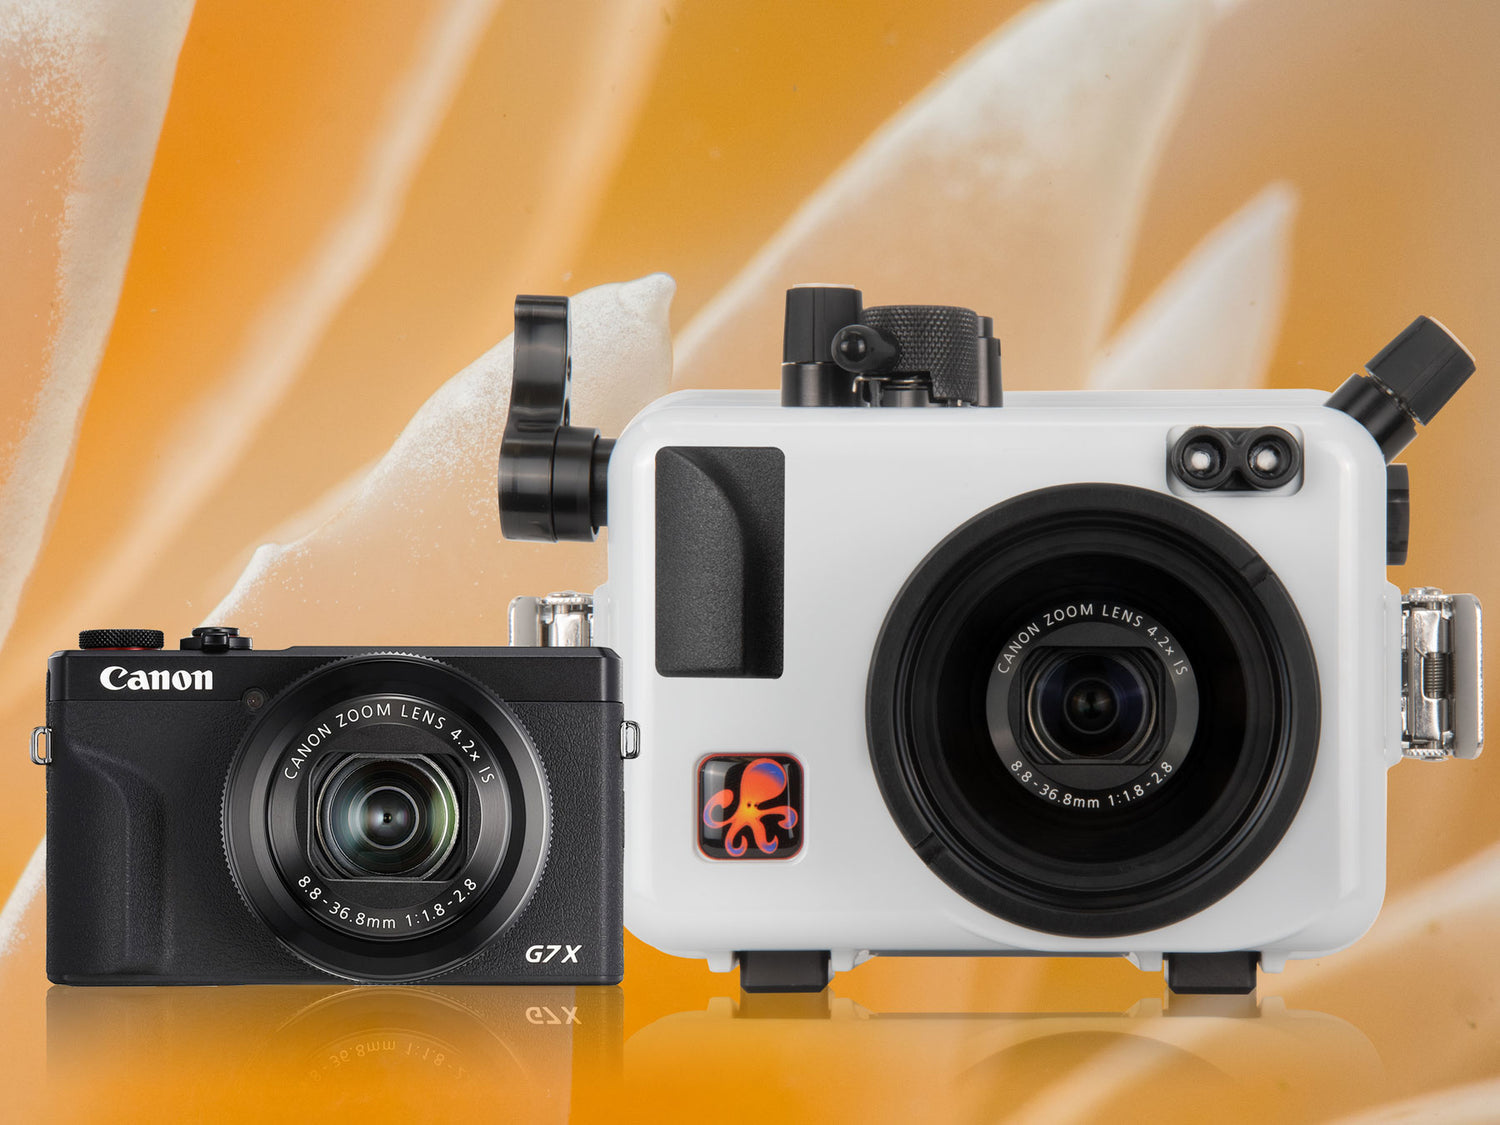 Canon PowerShot G7X Mark III Digital Camera with 4.2x Optical Zoom Lens  (Black)